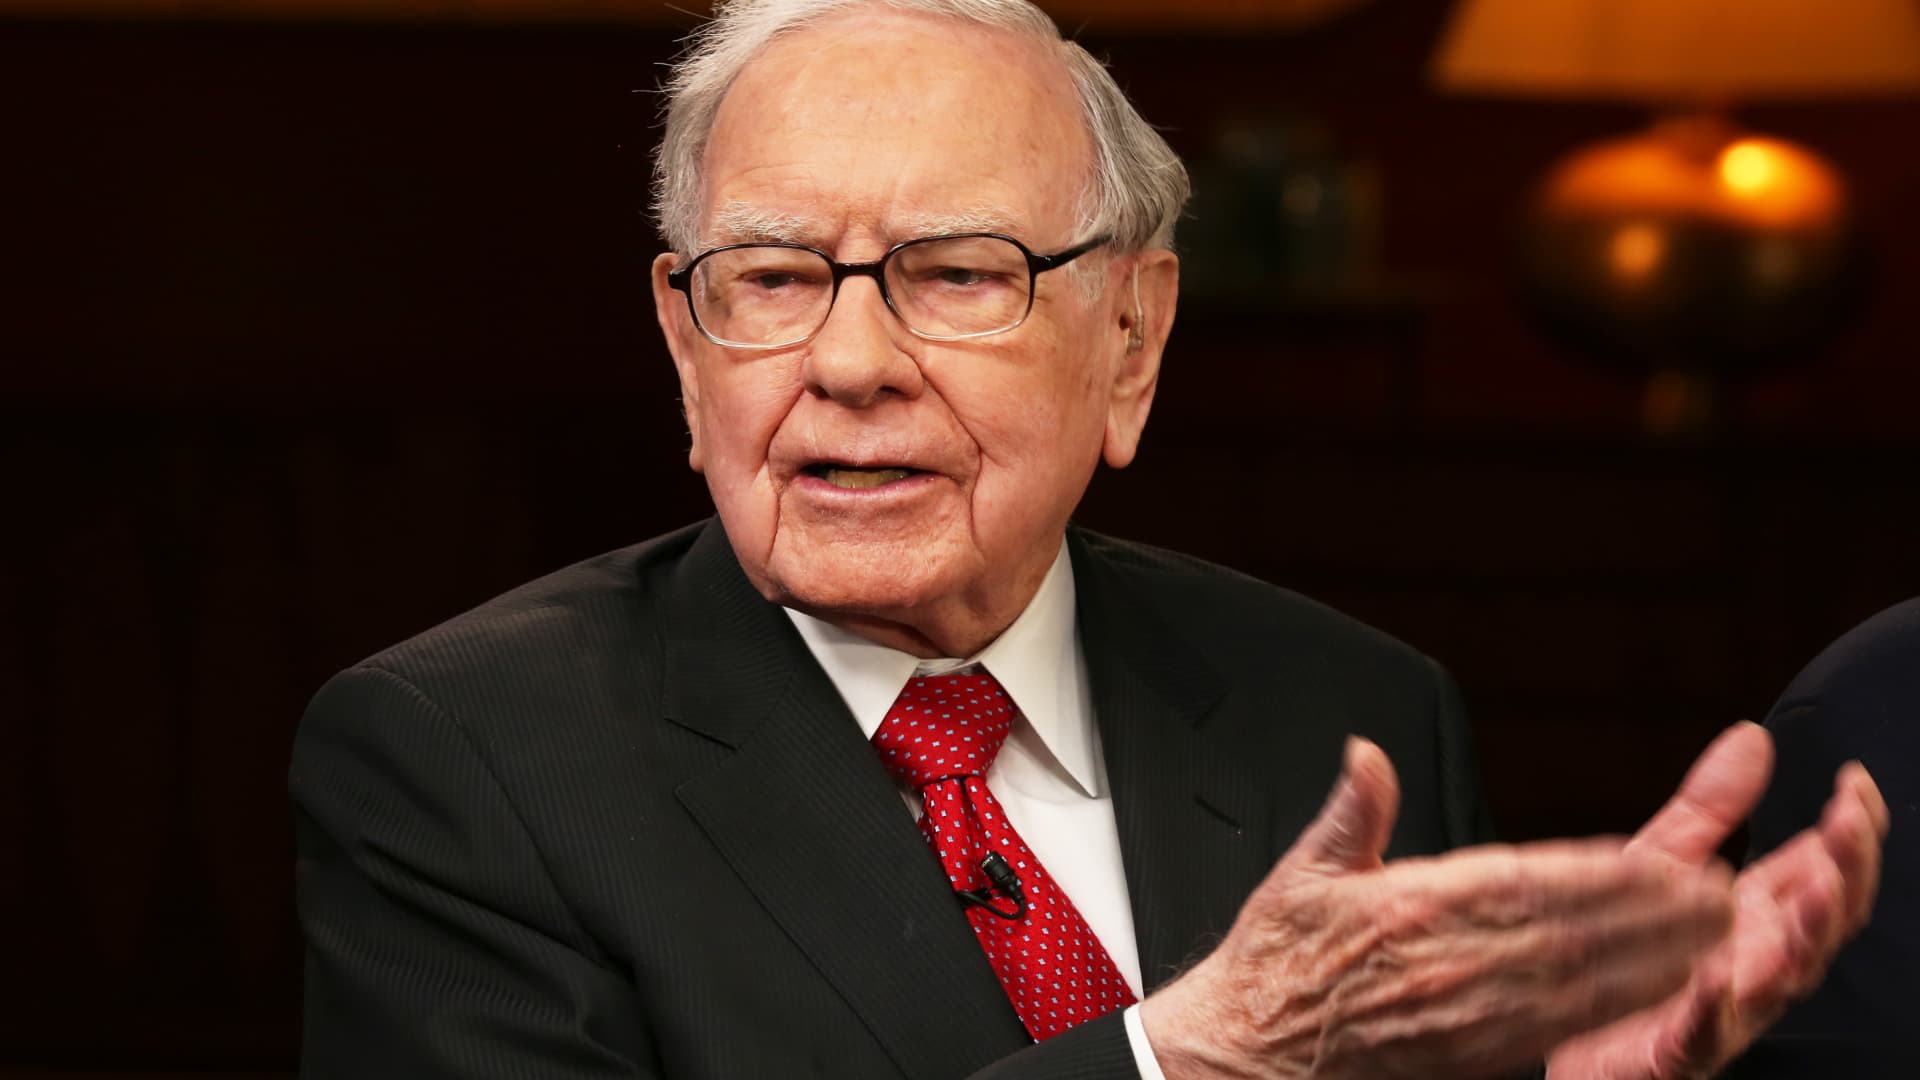 Warren Buffett explains his 0 million charitable donation on Thanksgiving eve